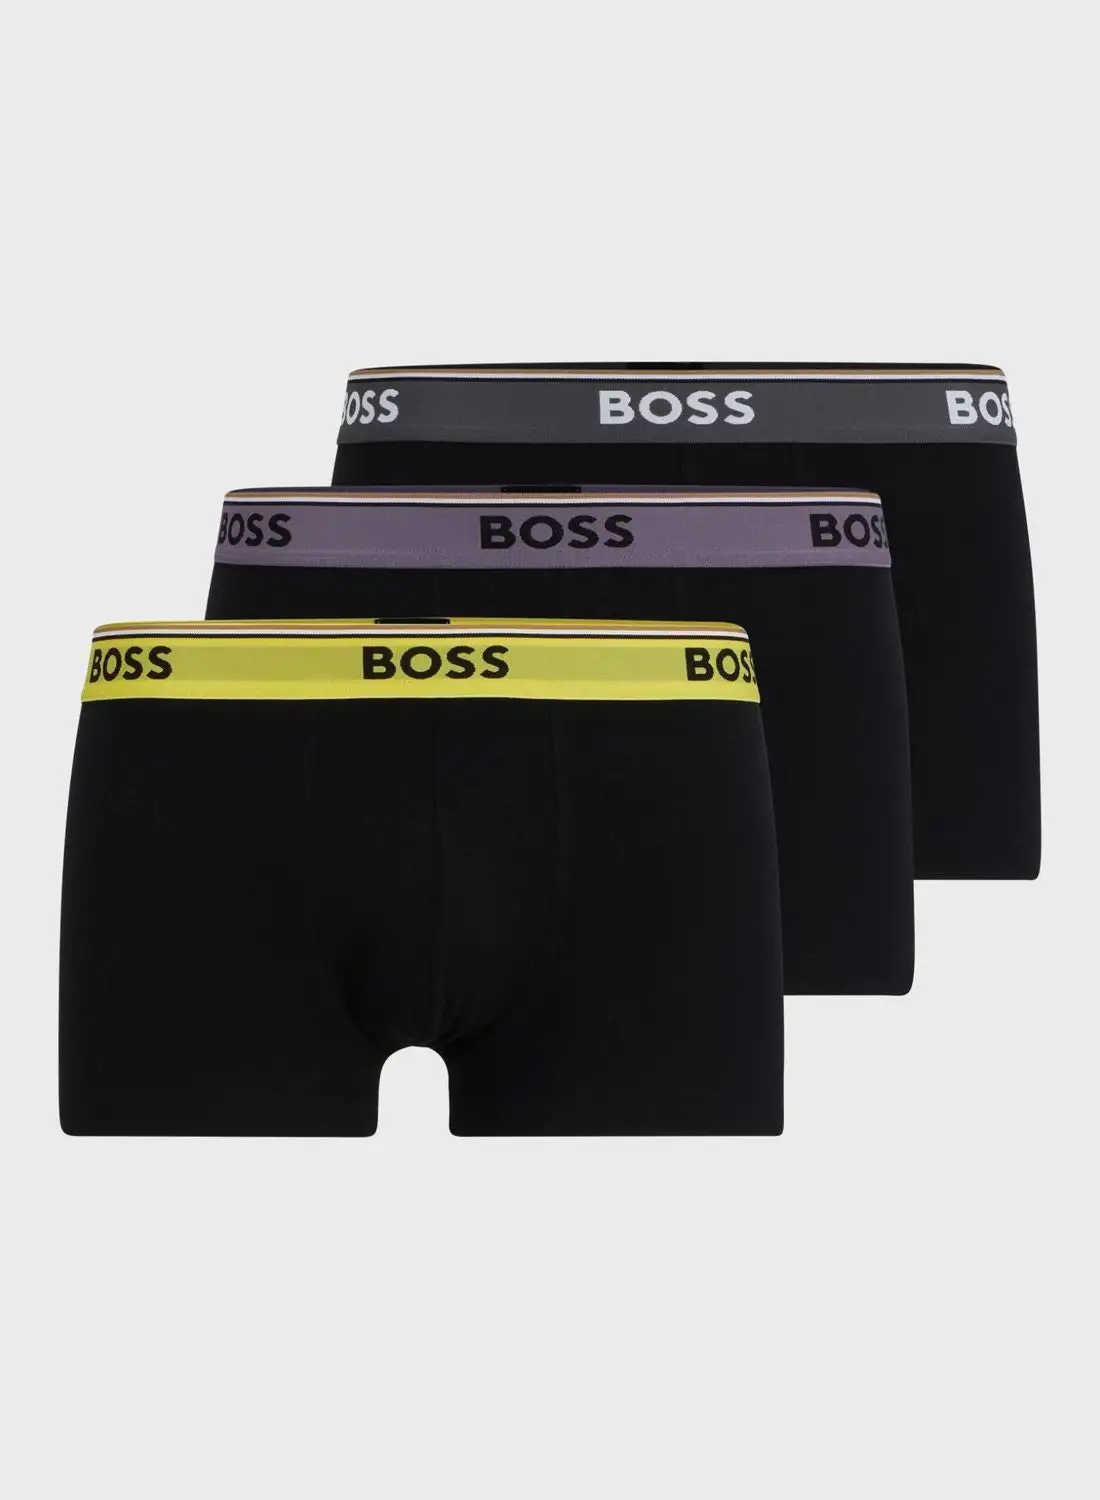 BOSS 3 - حزمة الملاكمين المتنوعة